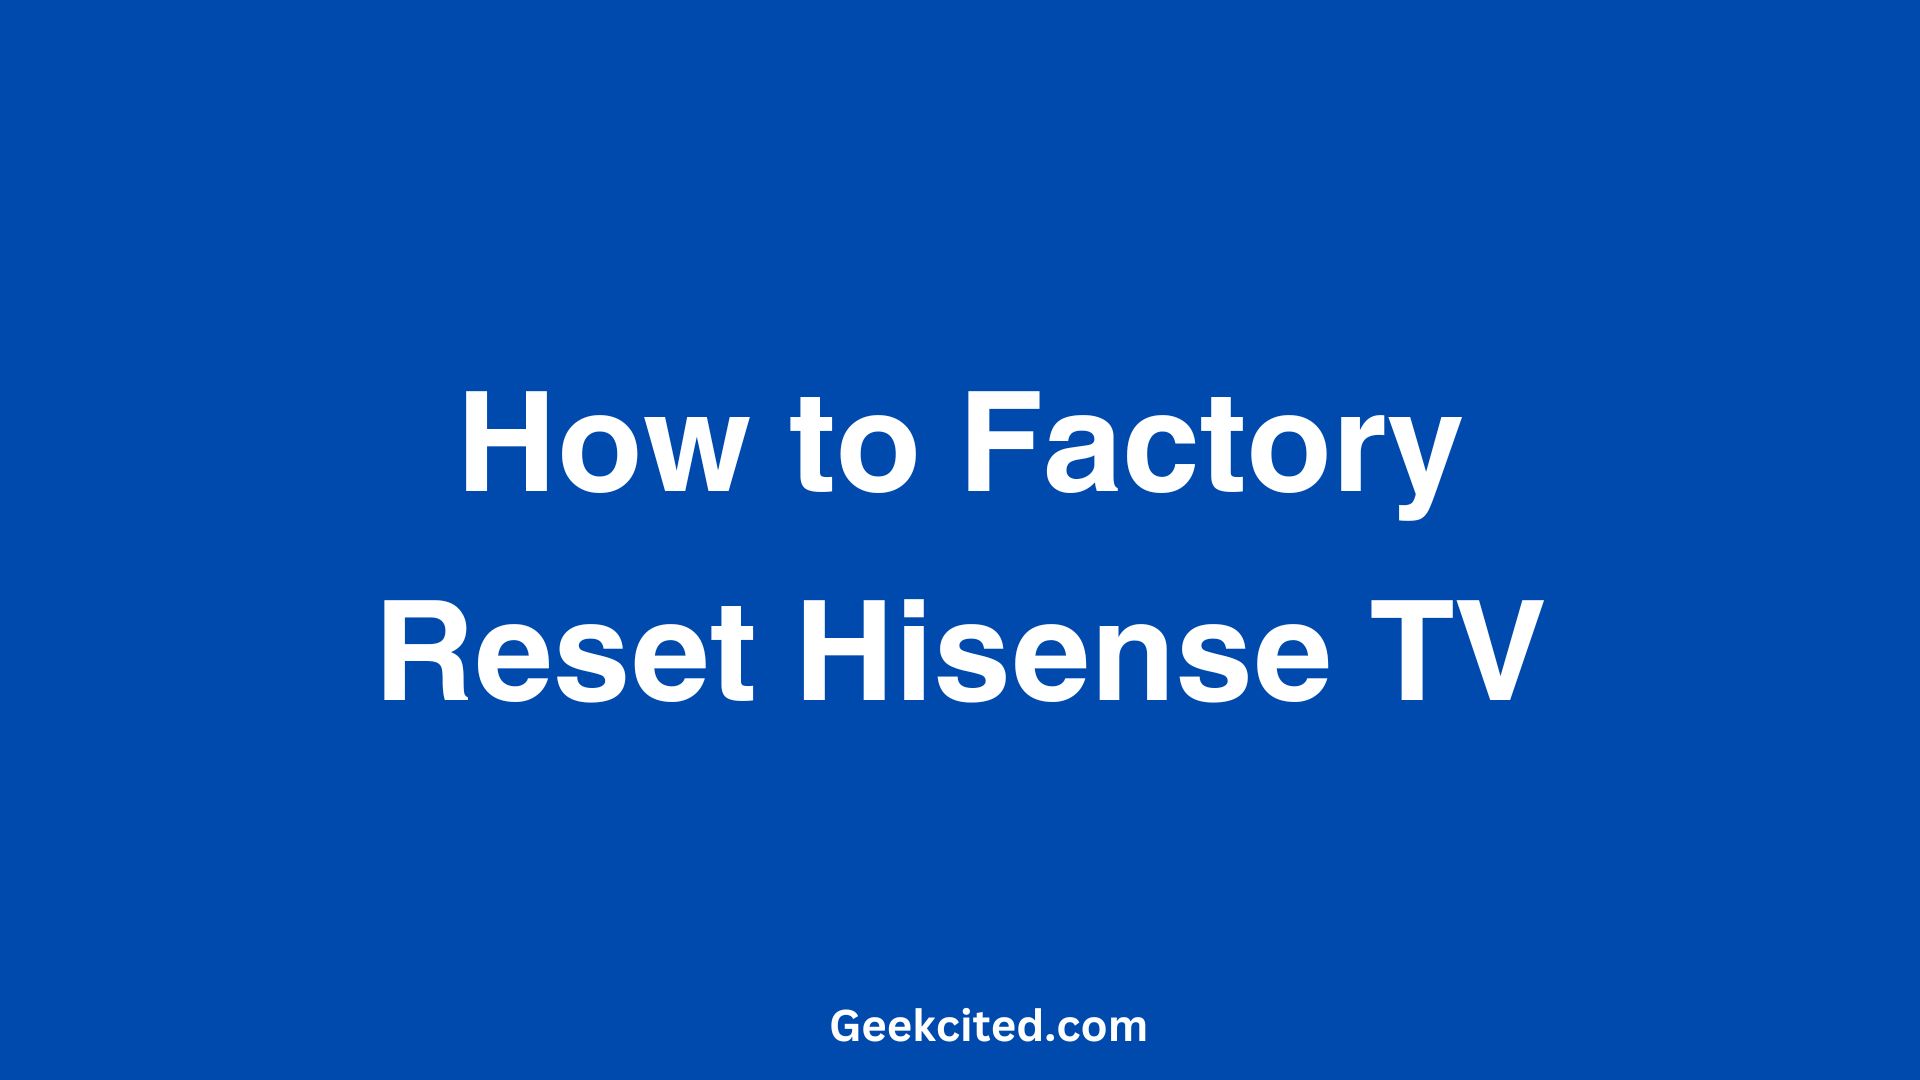 How to Factory Reset Hisense TV